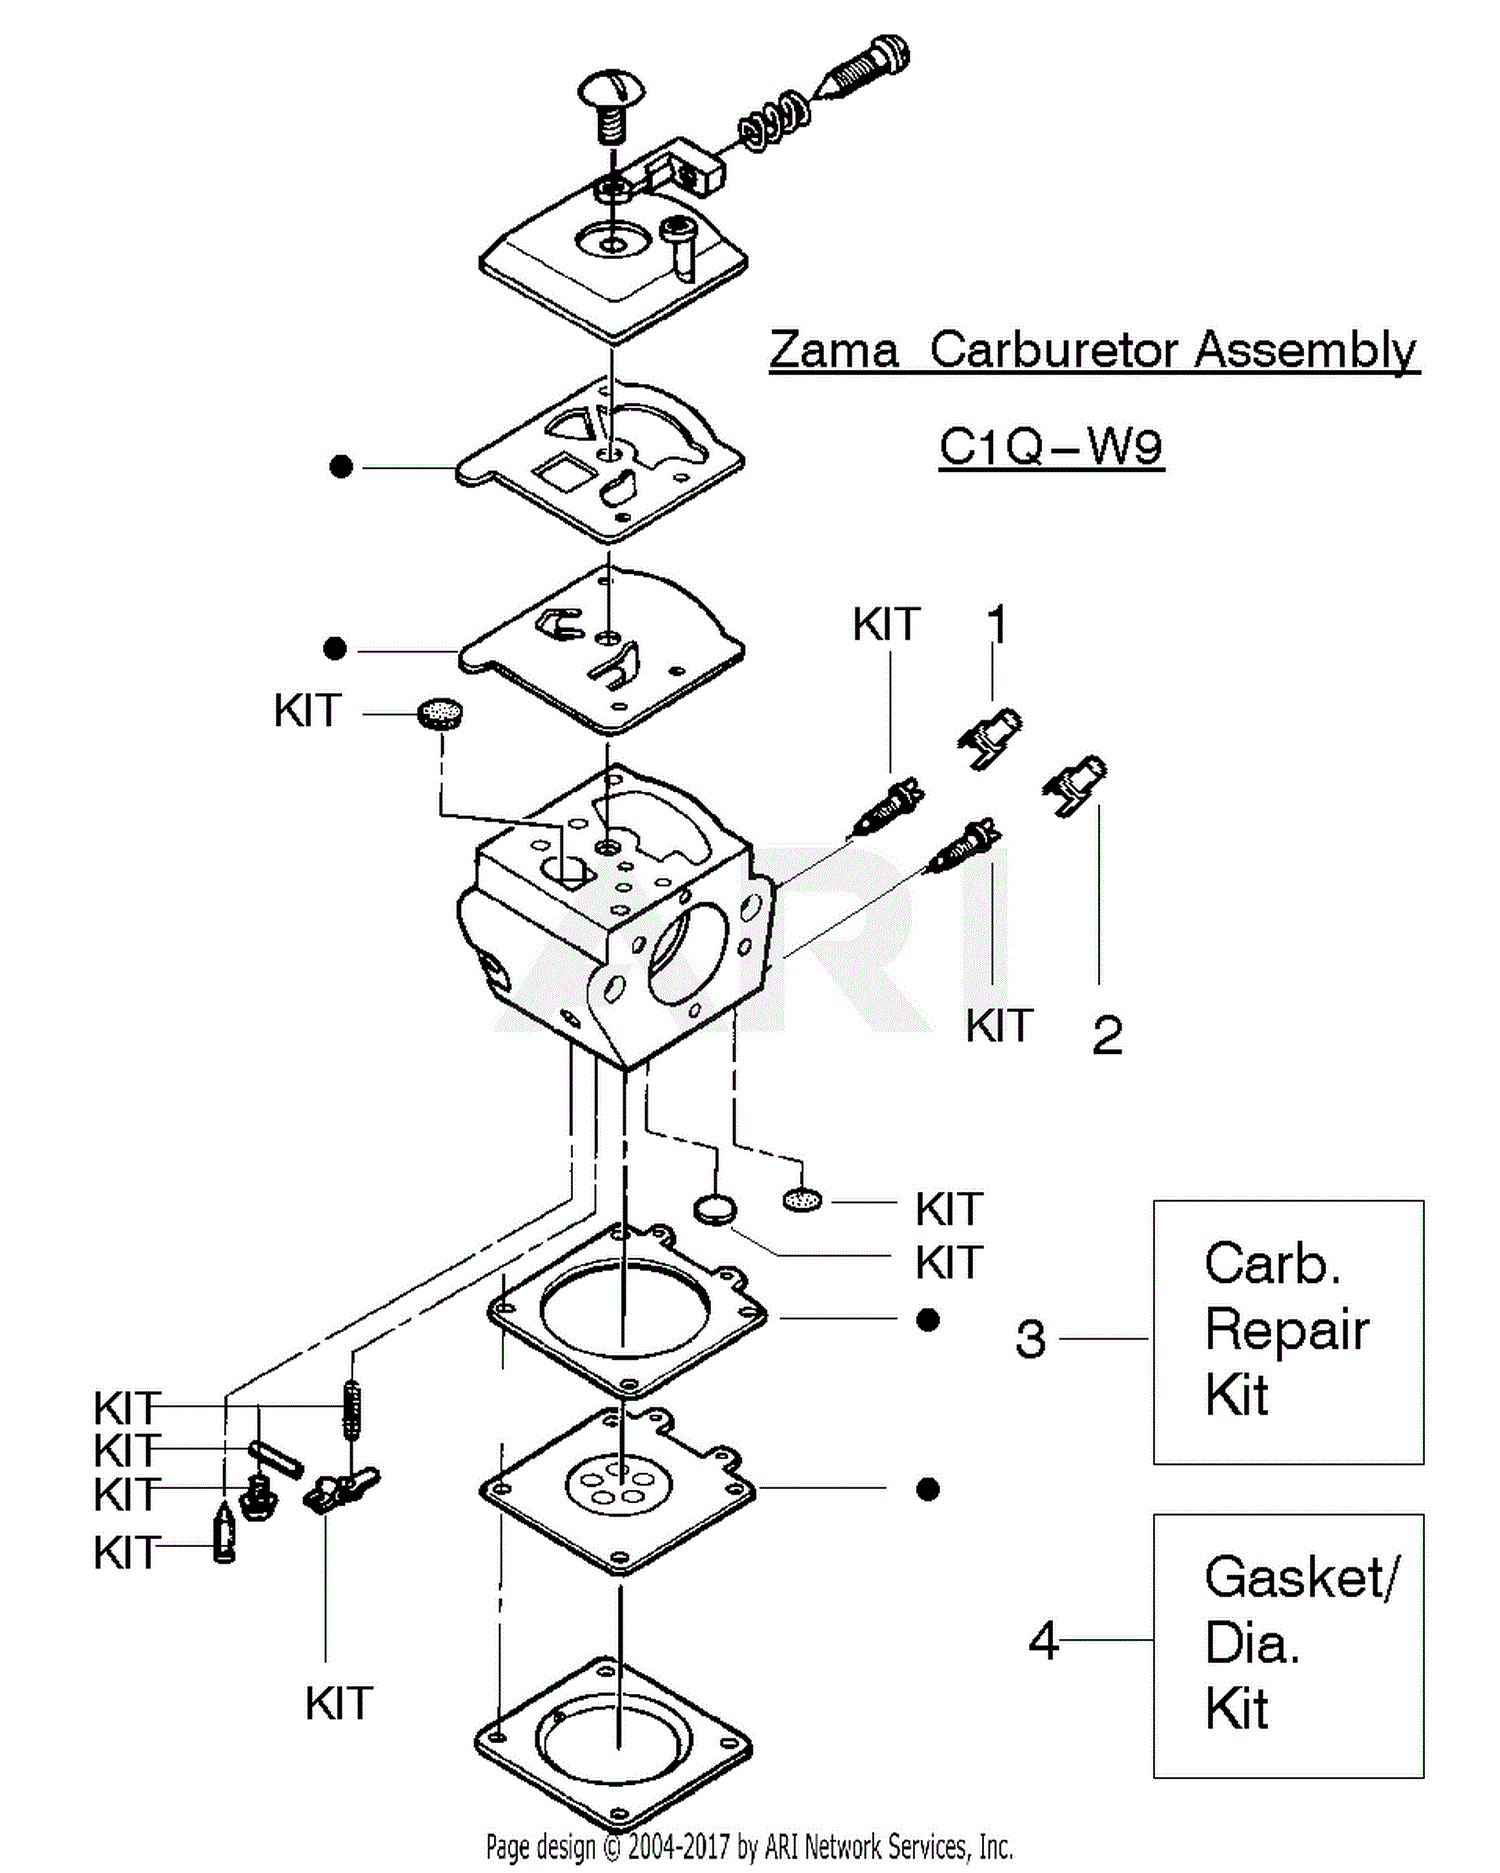 zama c10 carburetor diagram